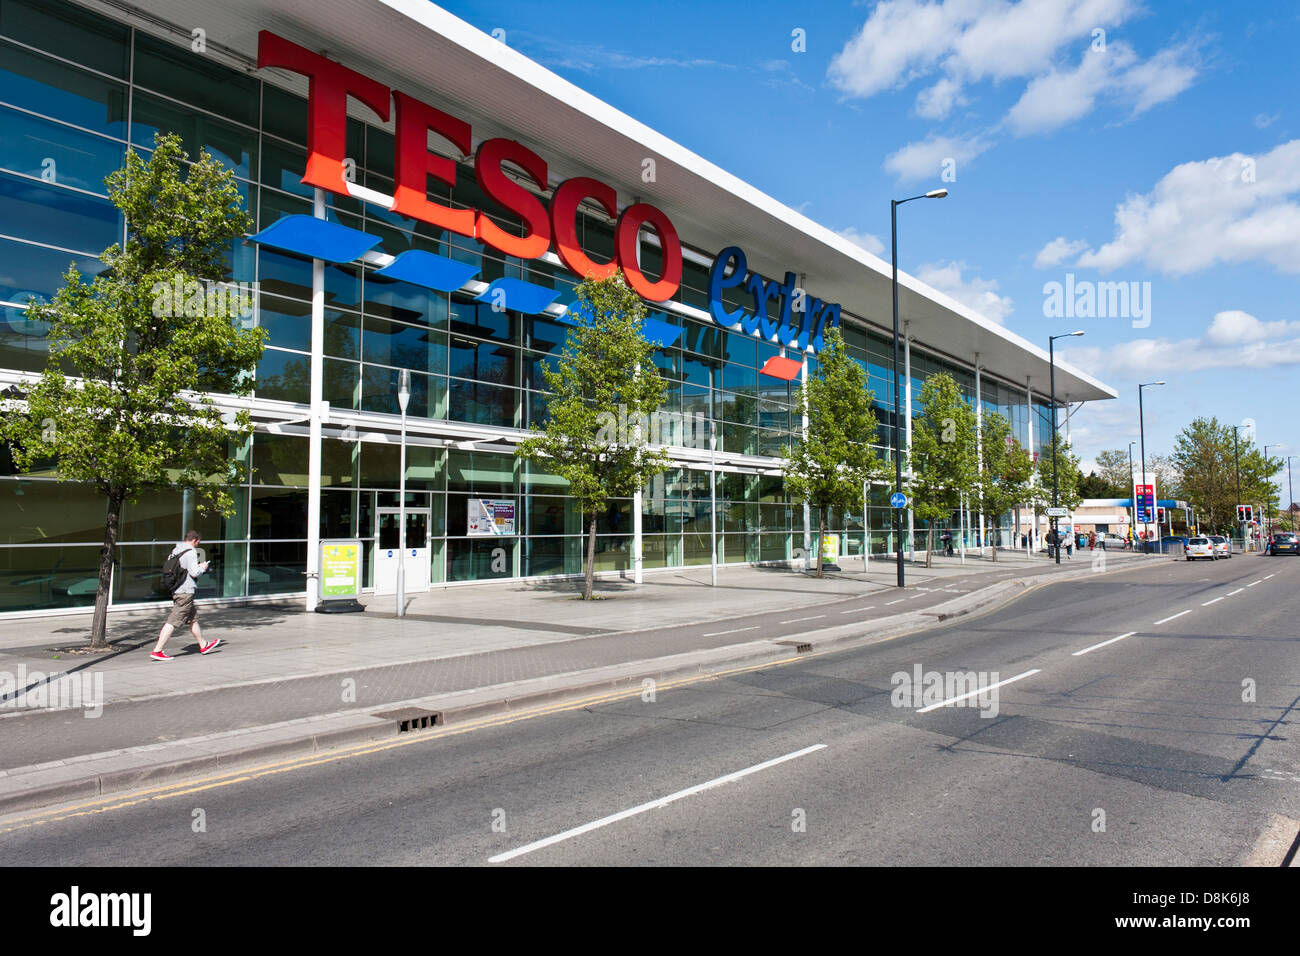 Exterior of Tesco Extra supermarket in Slough, Berkshire, England, GB, UK. Stock Photo